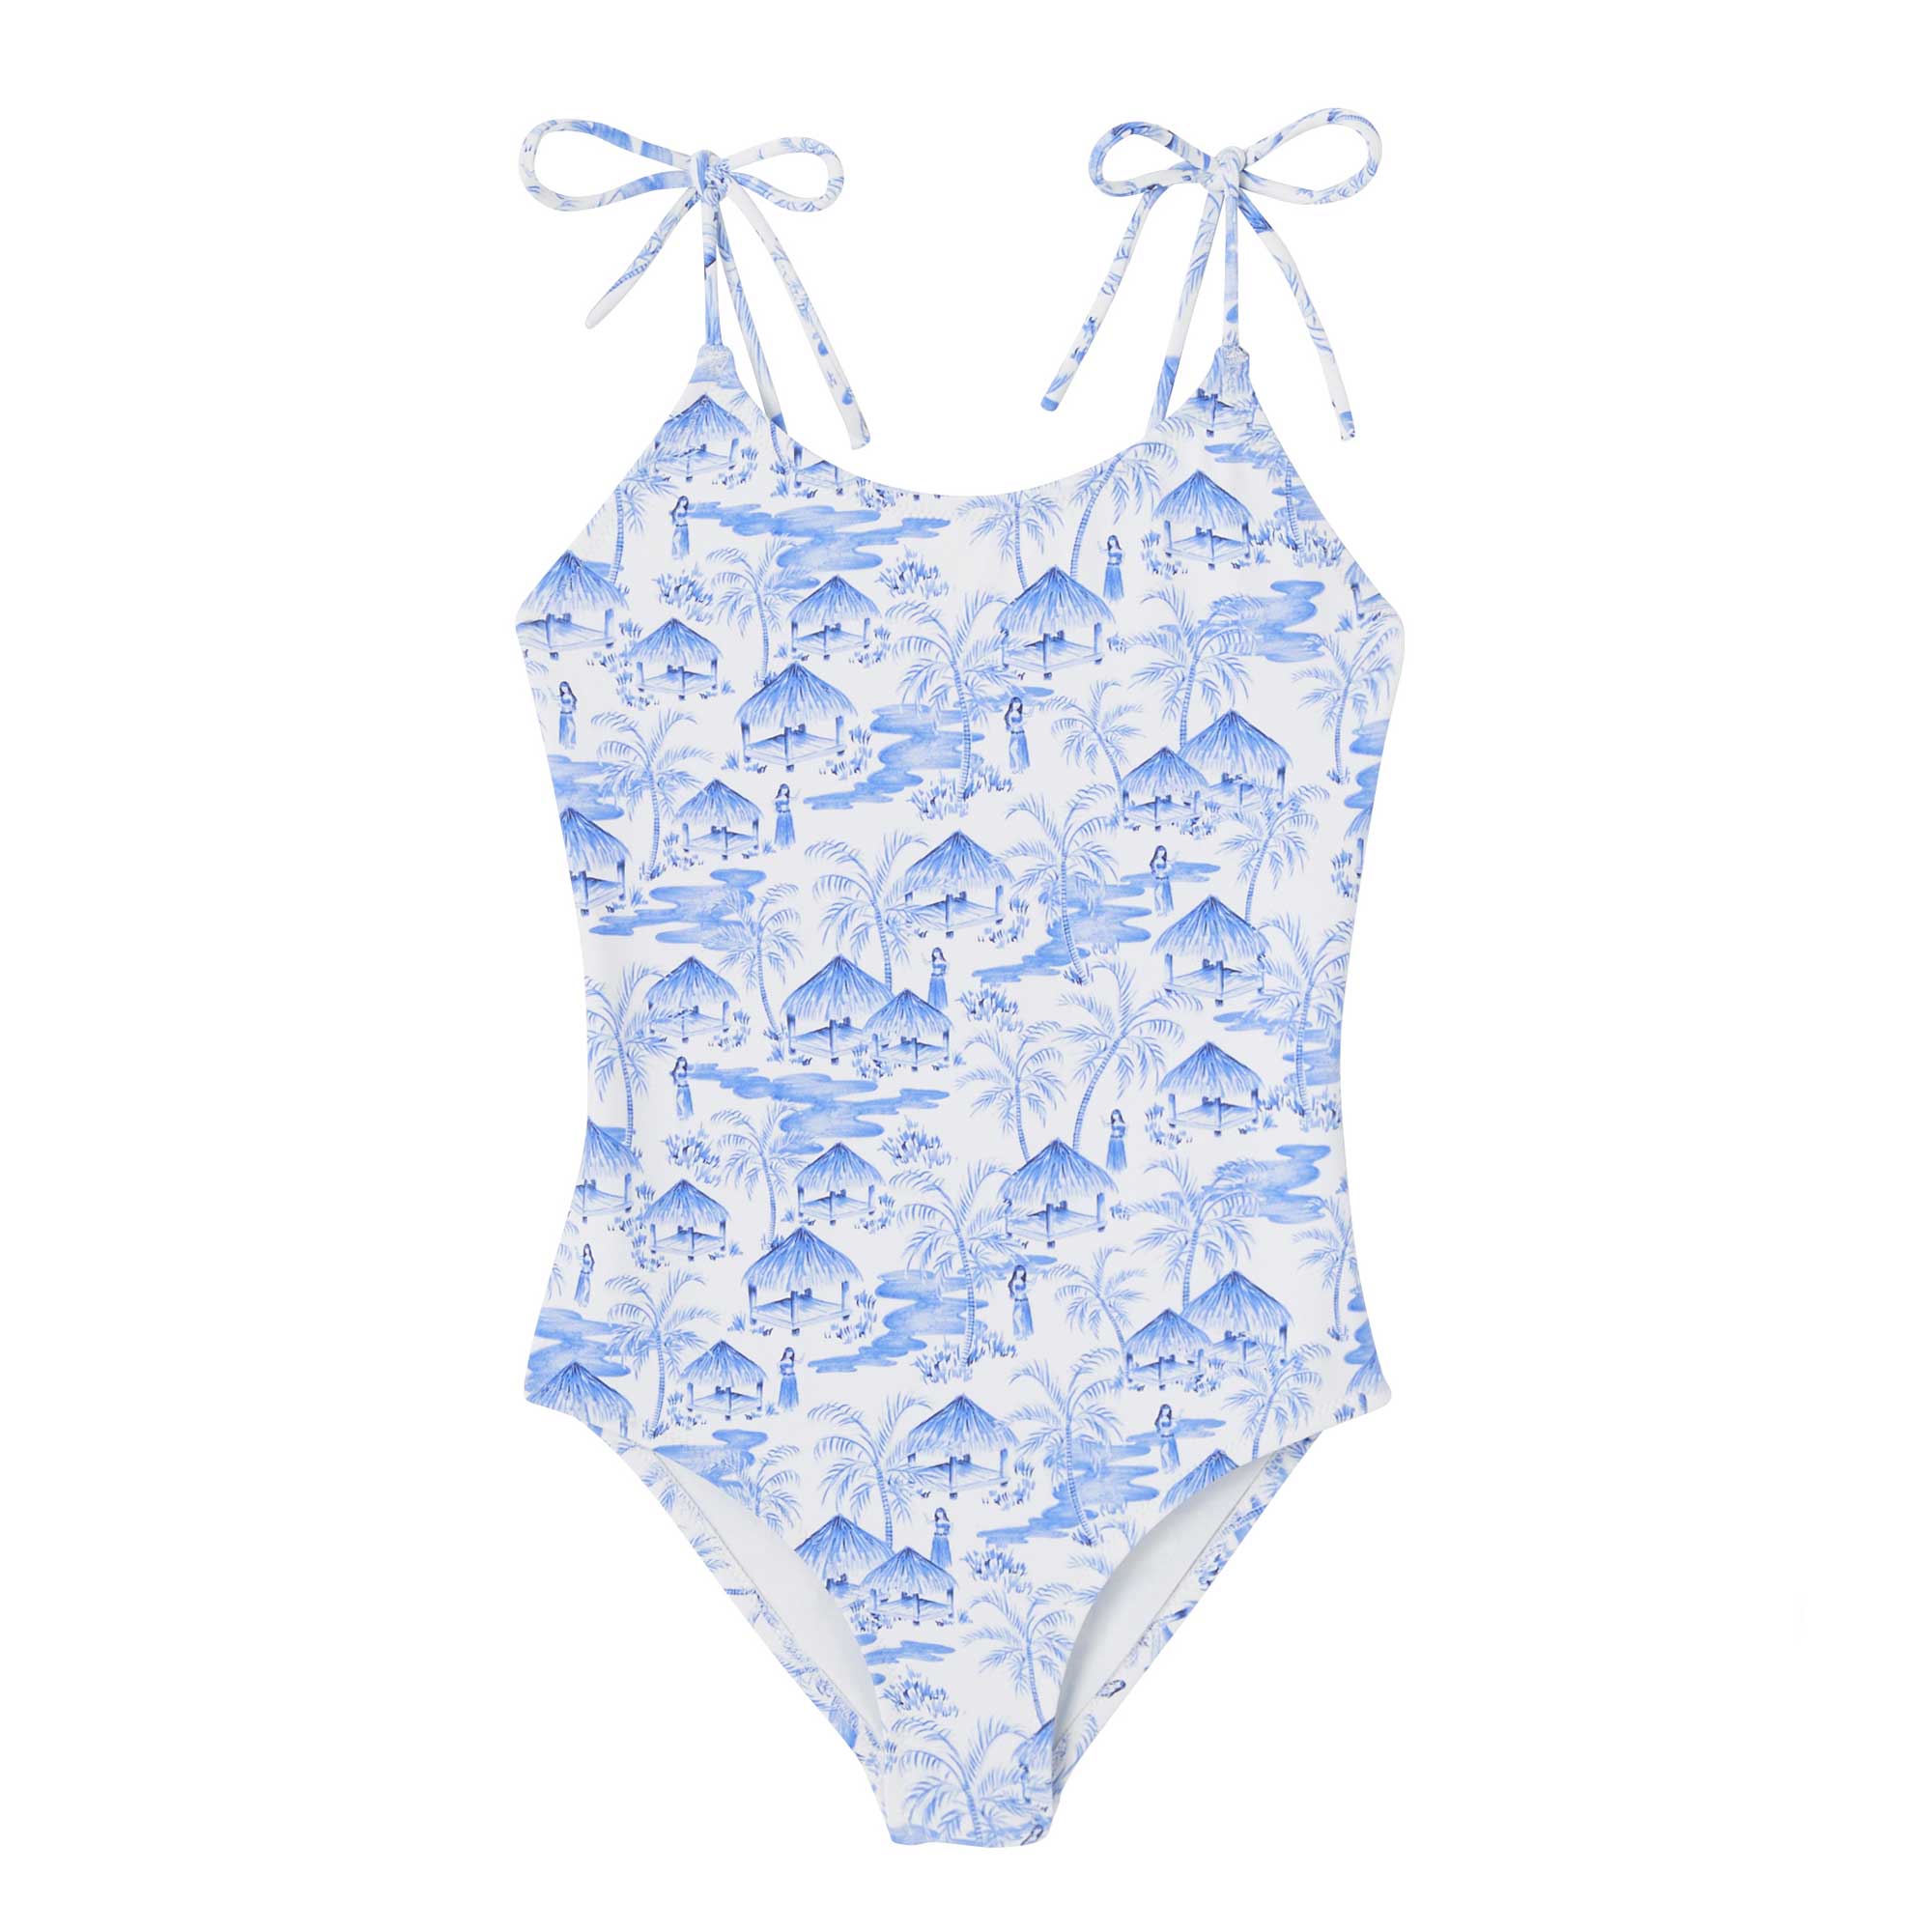 Blue vahine design one-piece teens swimming costume